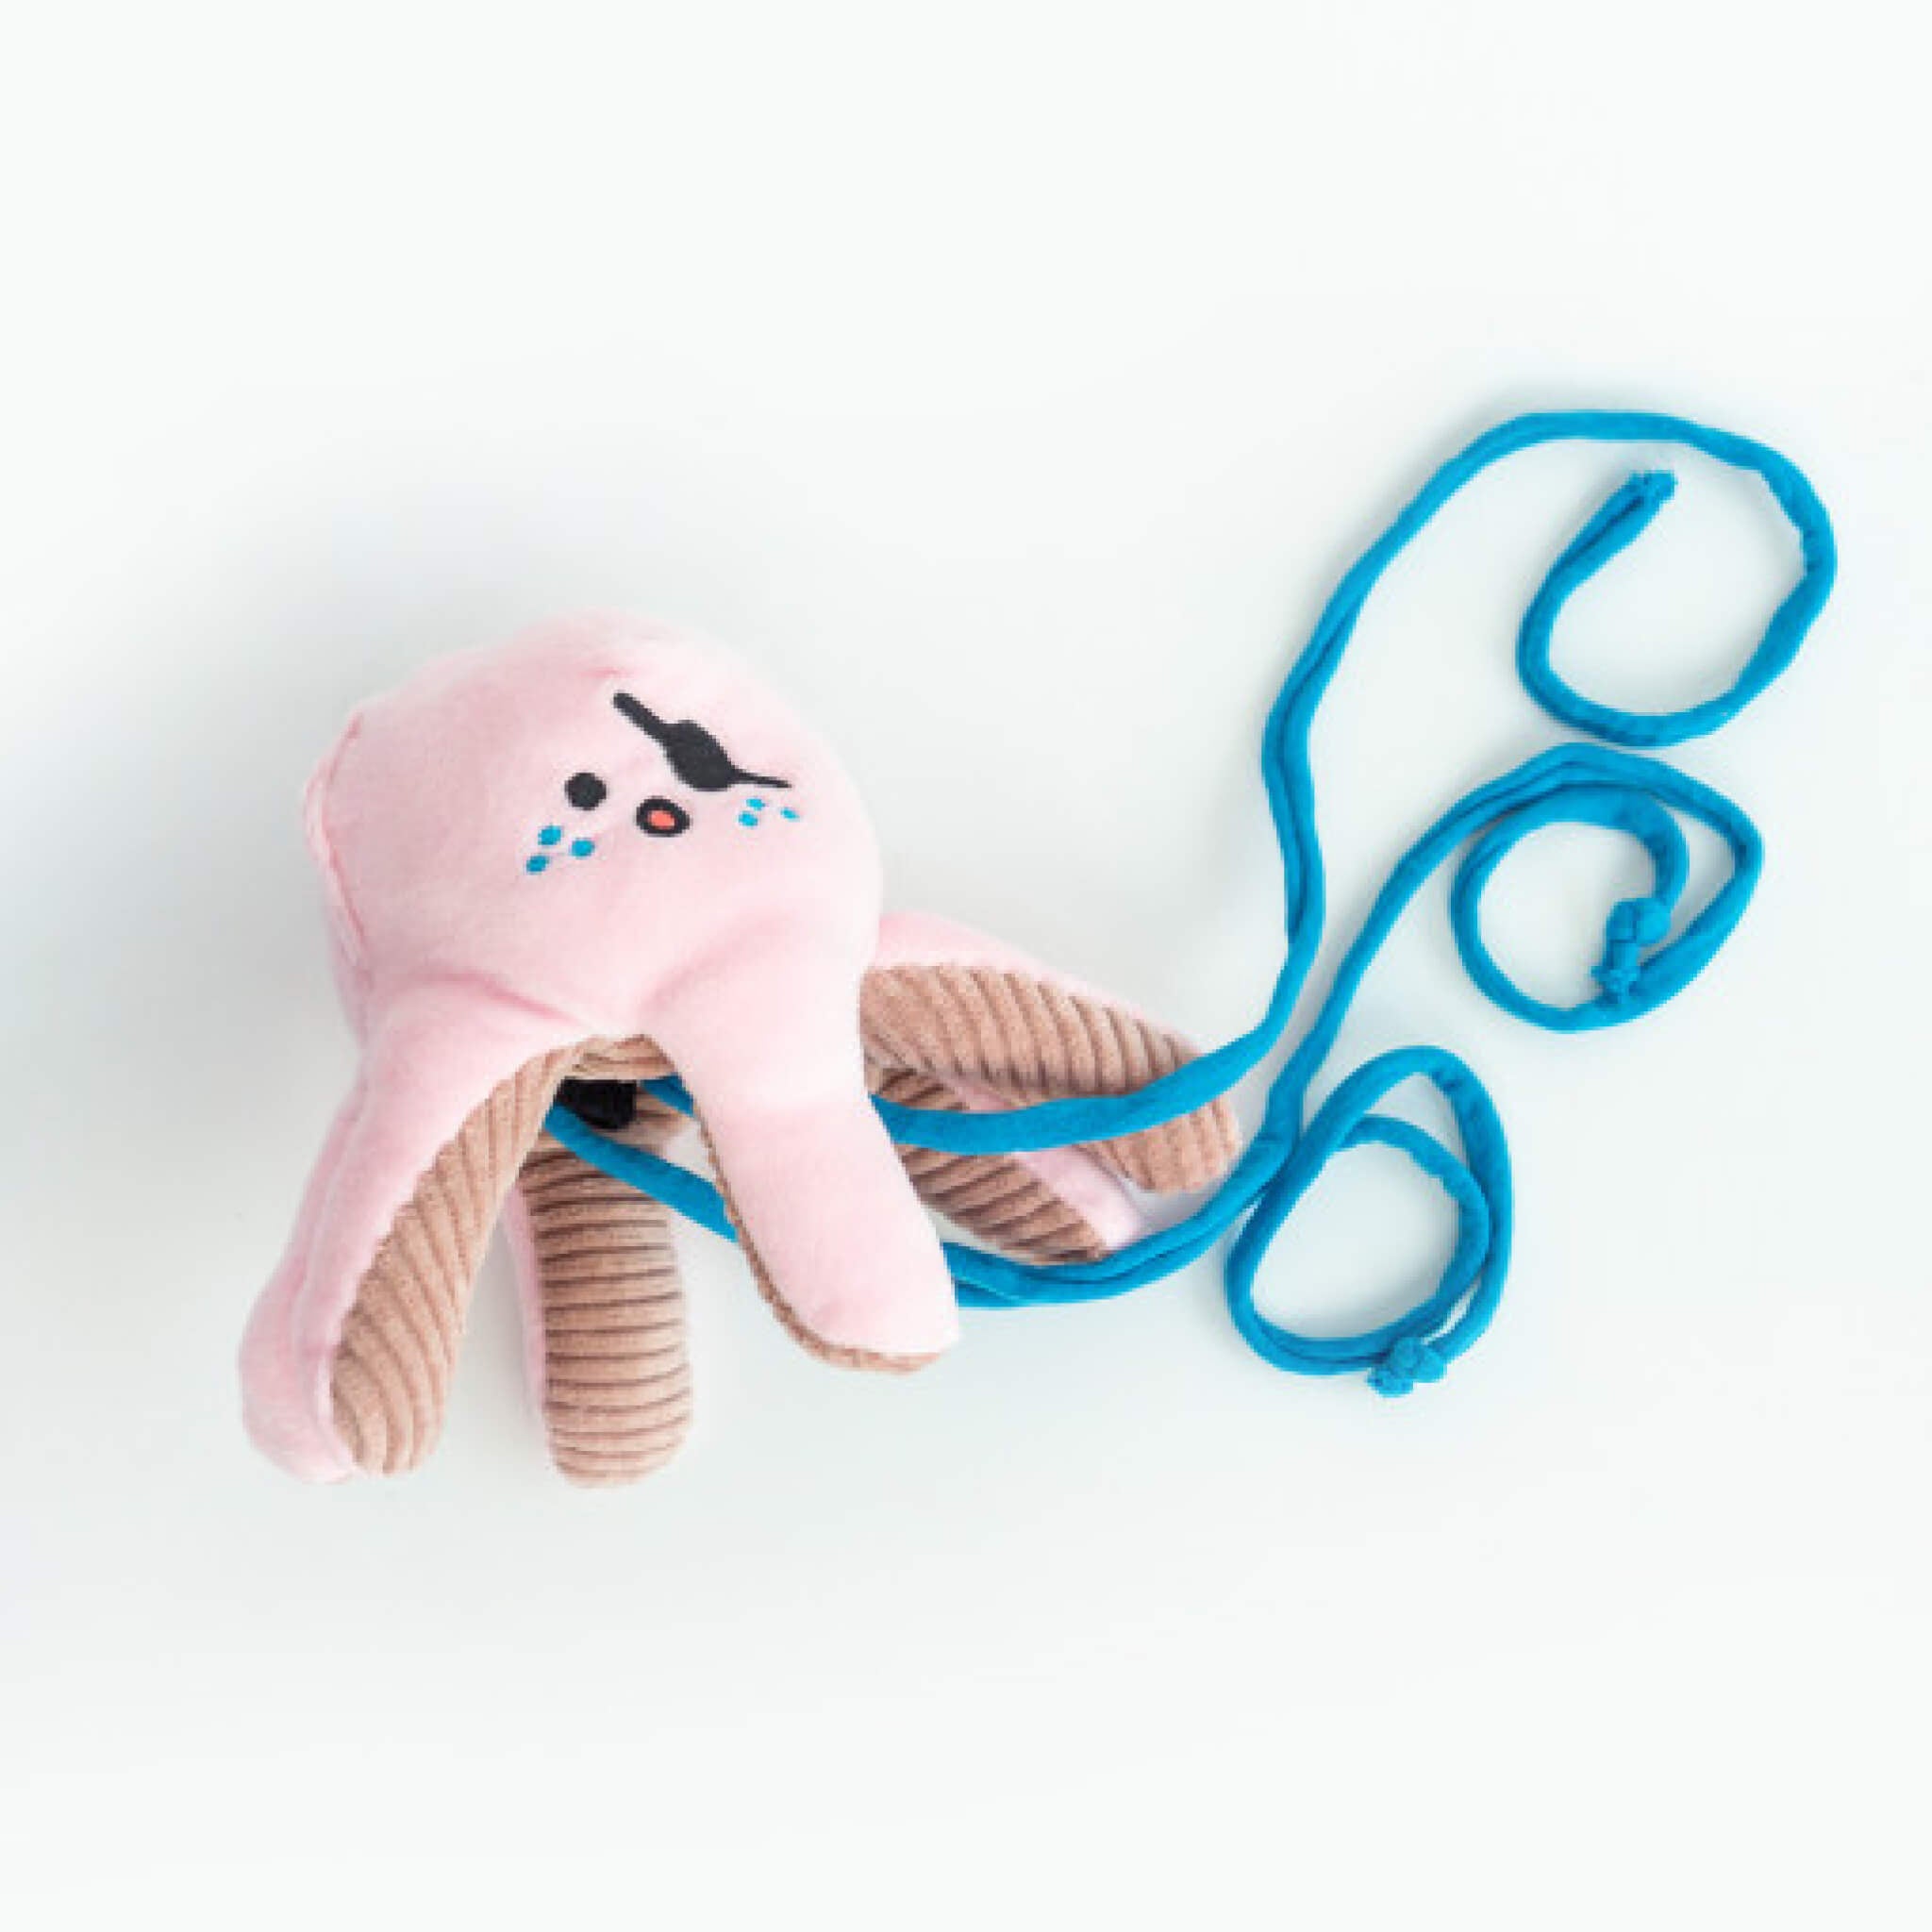 Octopus nosework toy.